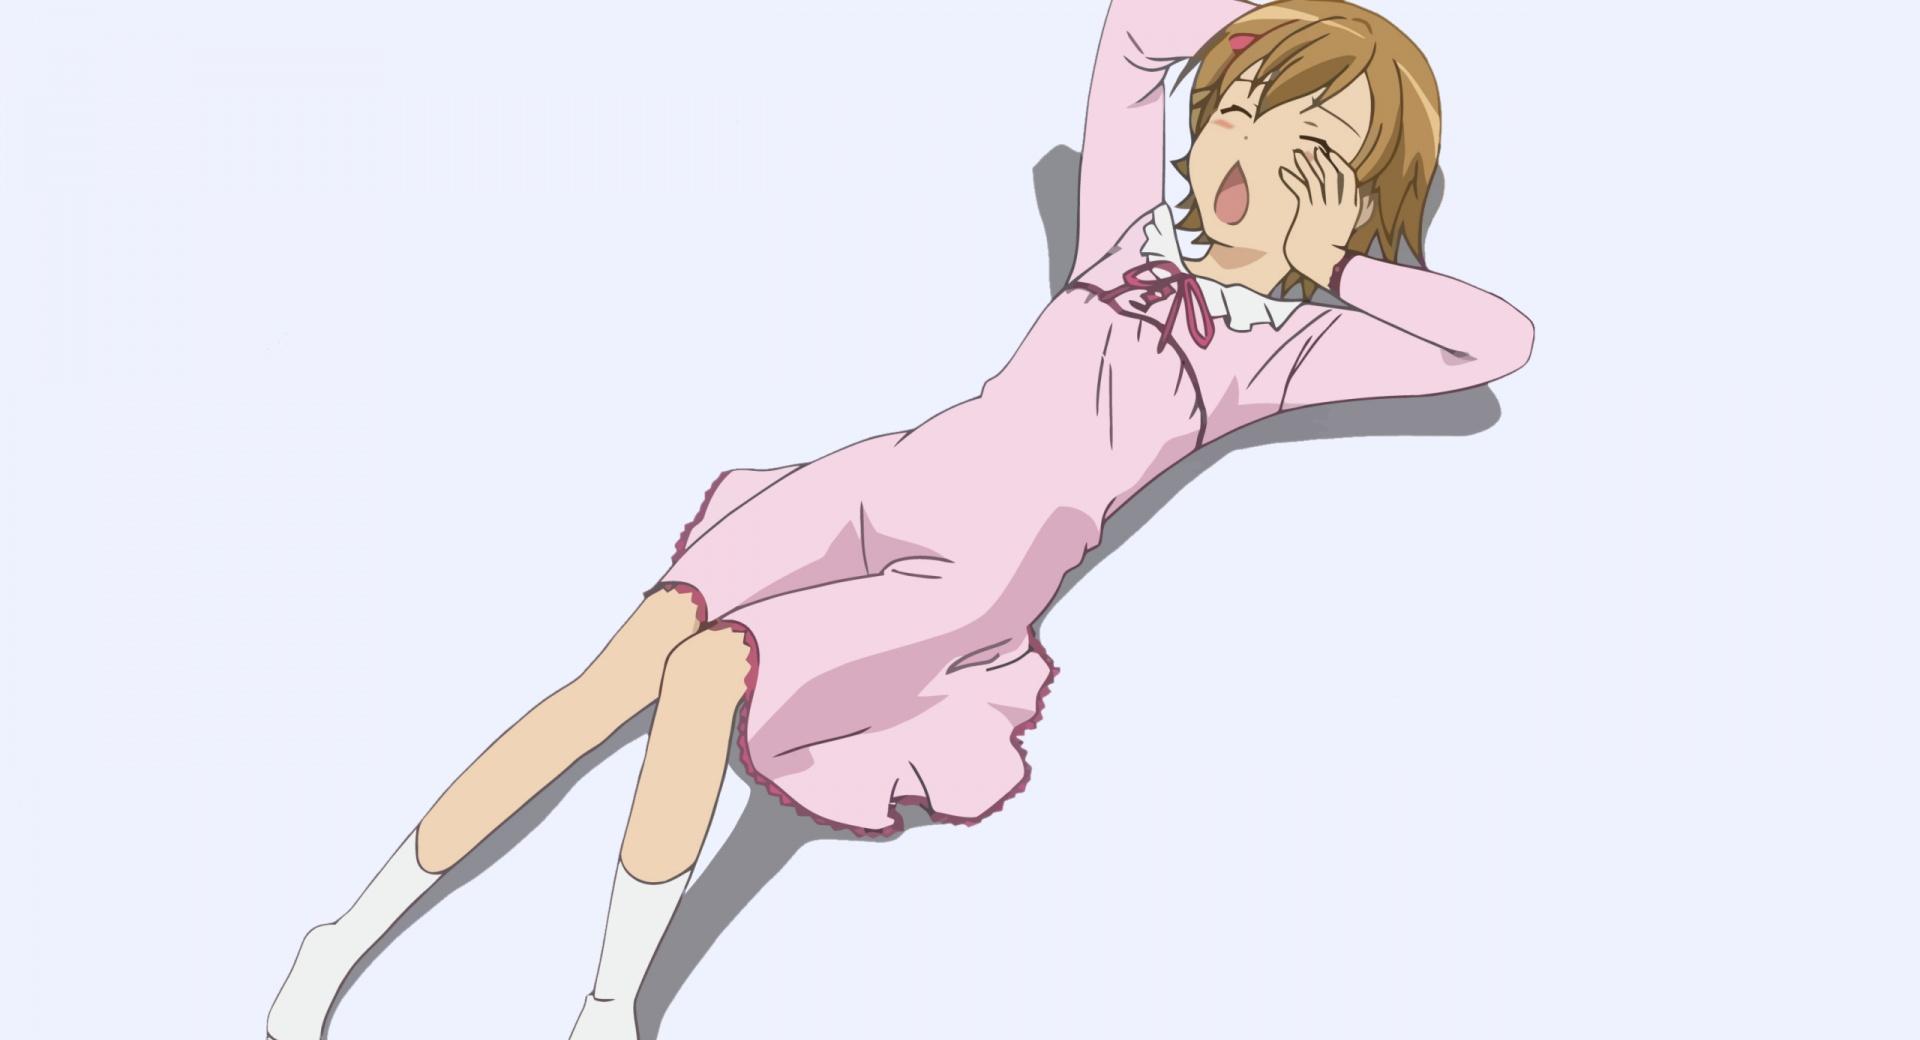 Anime Sleeping Girl at 1024 x 1024 iPad size wallpapers HD quality